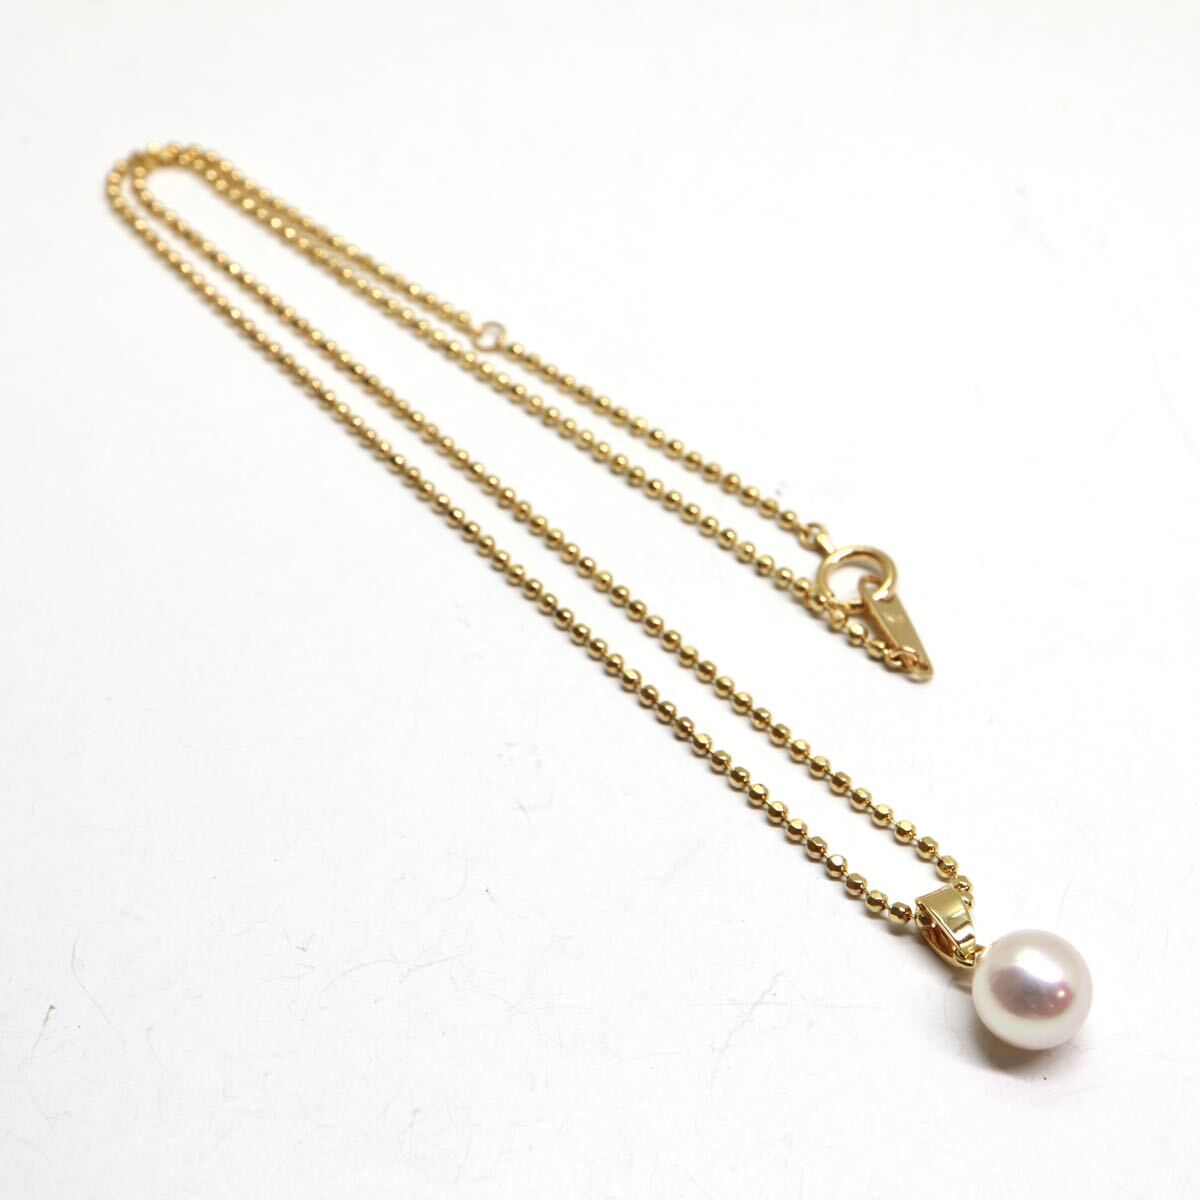 MIKIMOTO(ミキモト)《K18 アコヤ本真珠ネックレス》A 4.2g 約39.5cm pearl necklace パール jewelry EC3/EC4の画像5